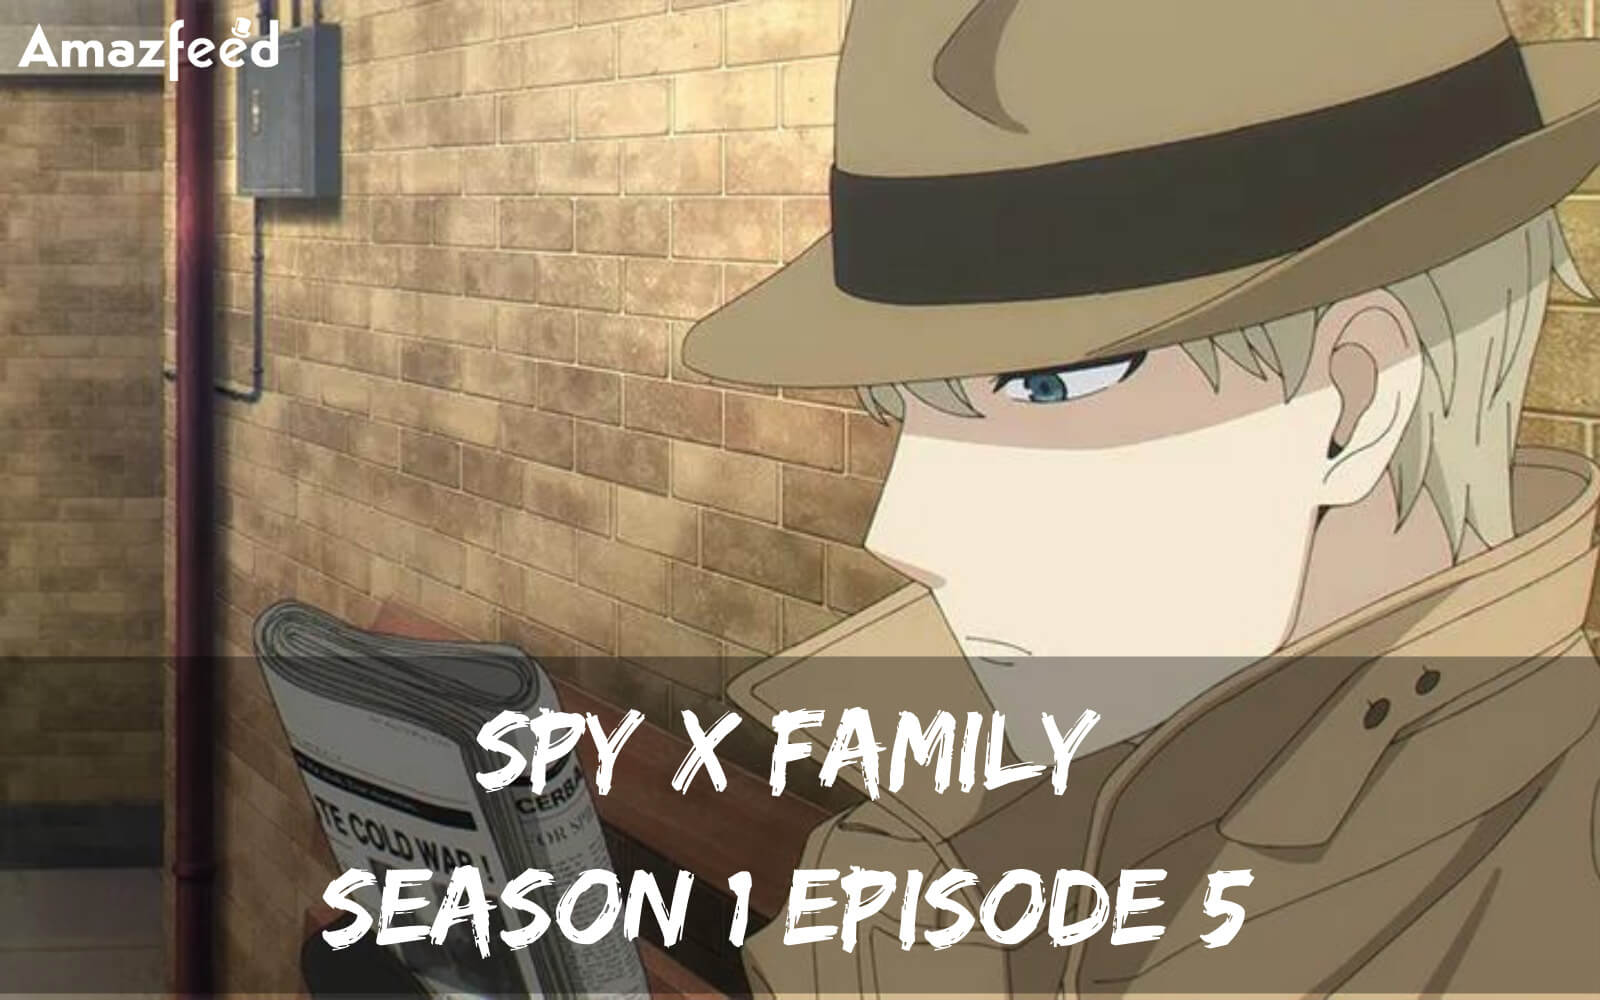 Spy x Family Season 1 Episode 5 release date